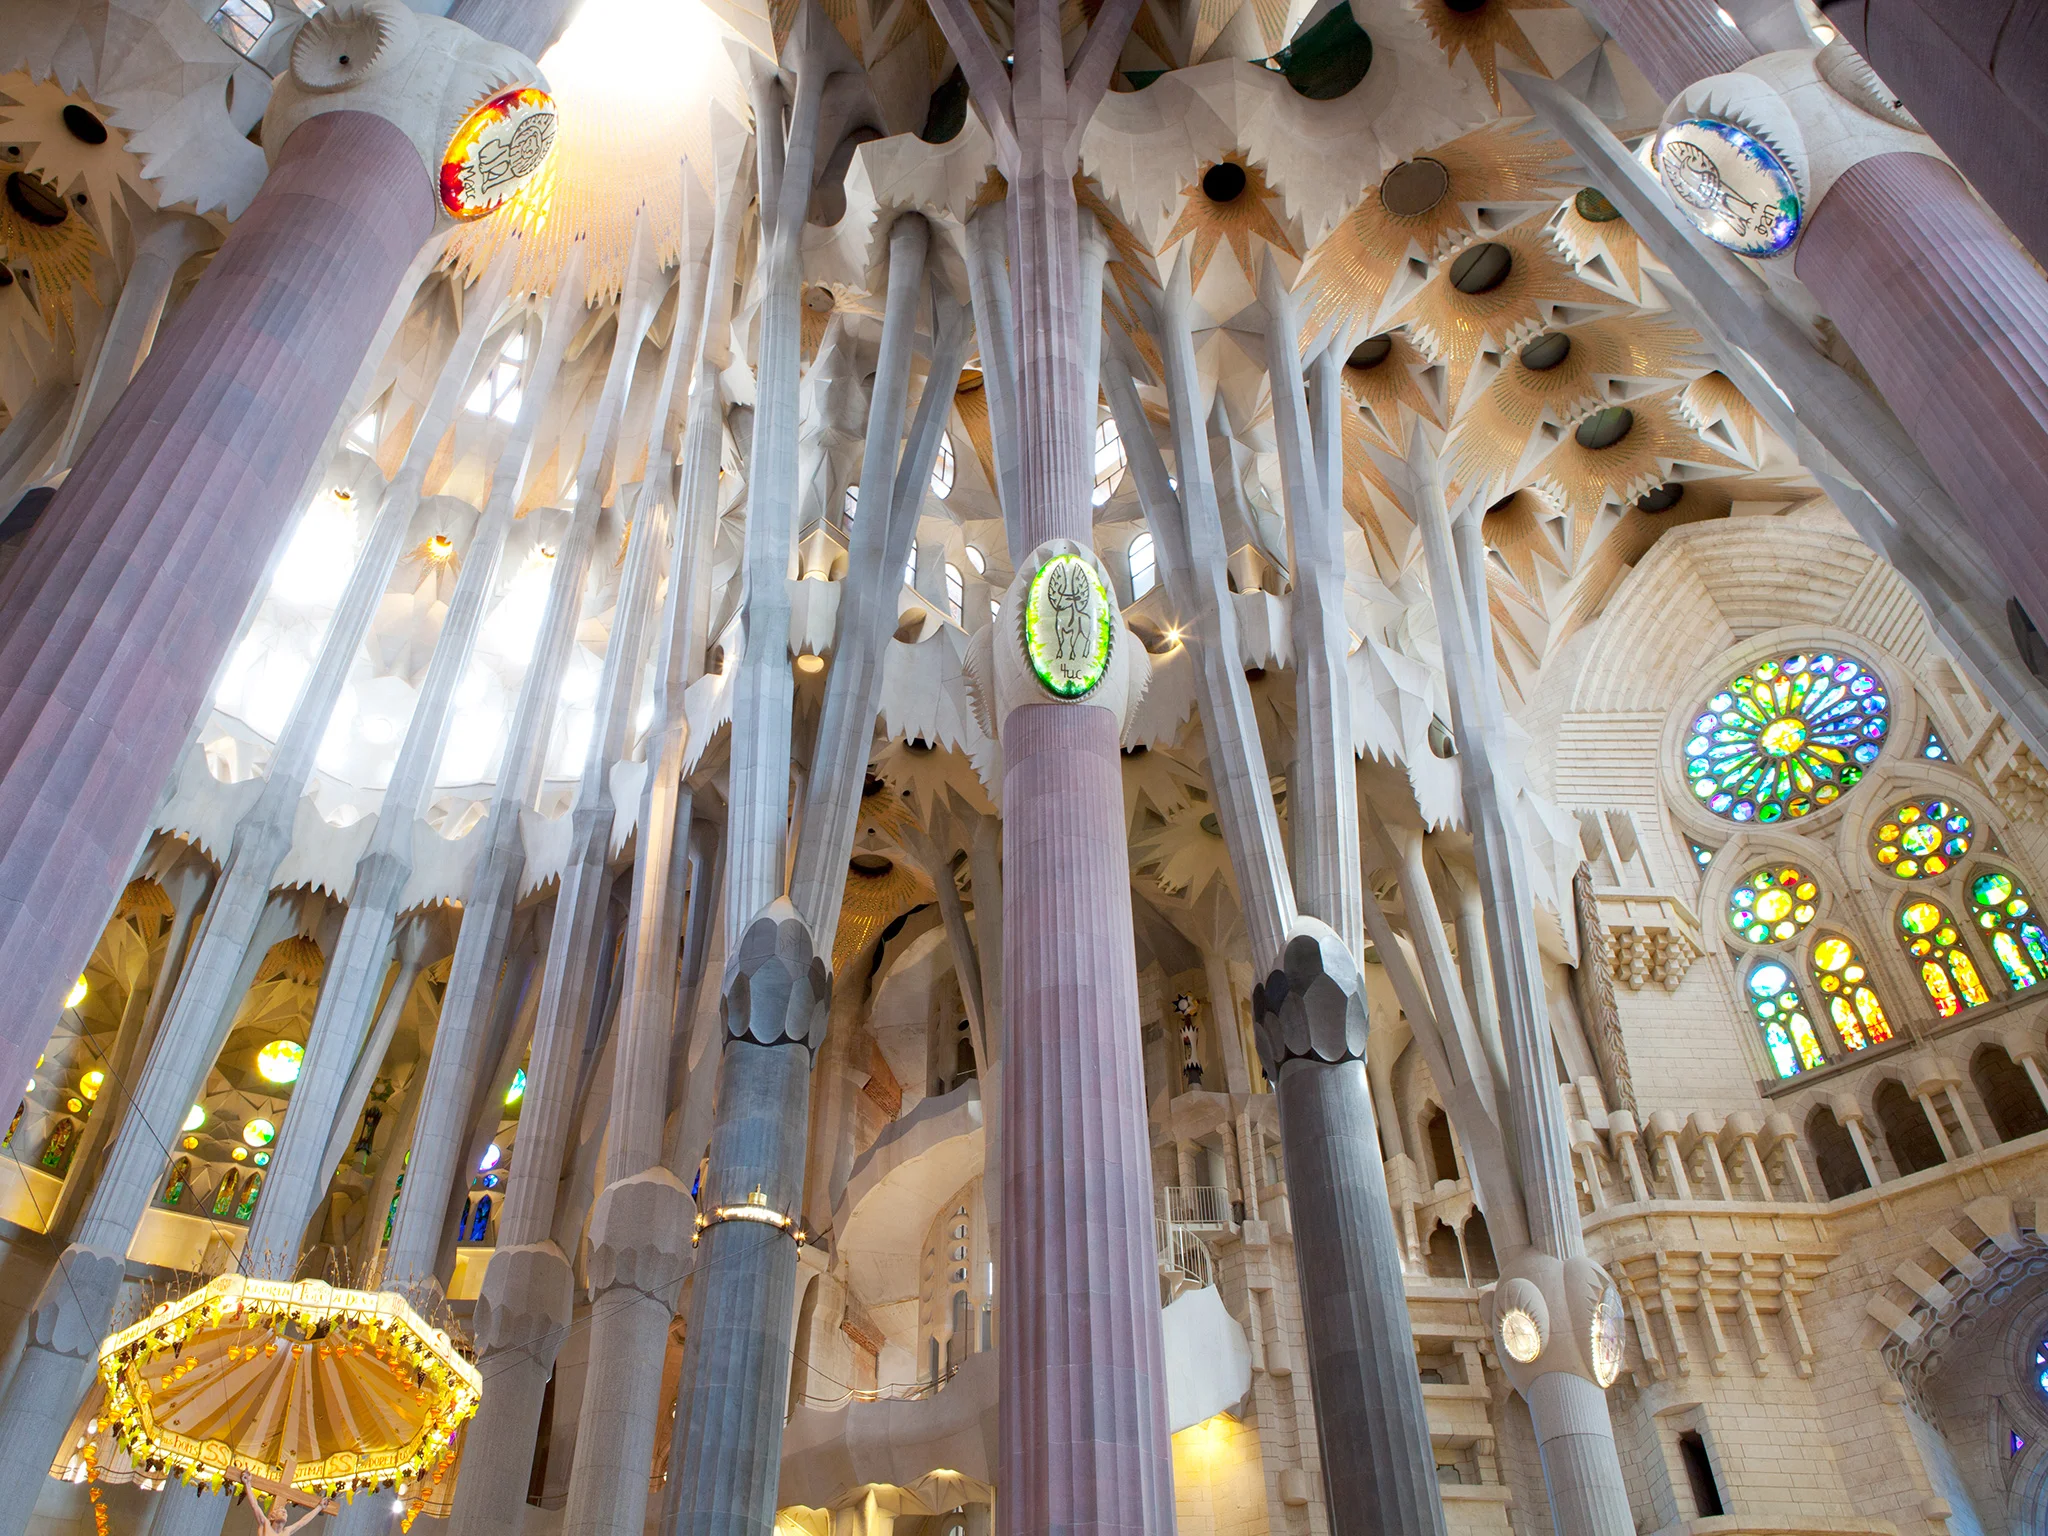 Sagrada Familia by Gaudi - Basilica in Barcelona, Spain - 137 Year Project 96